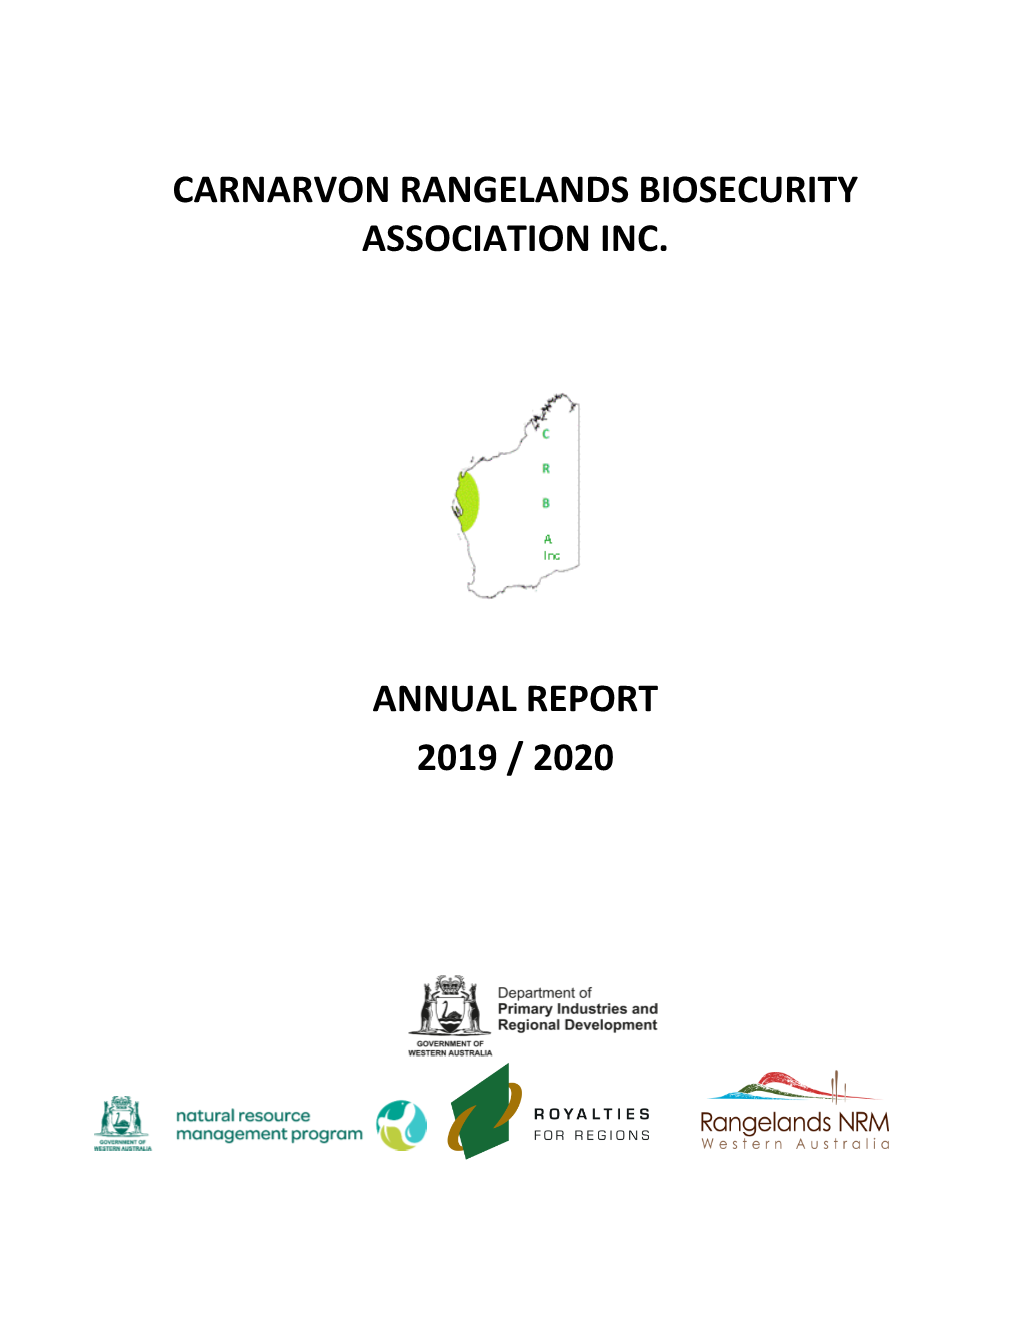 Carnarvon Rangelands Biosecurity Association Inc